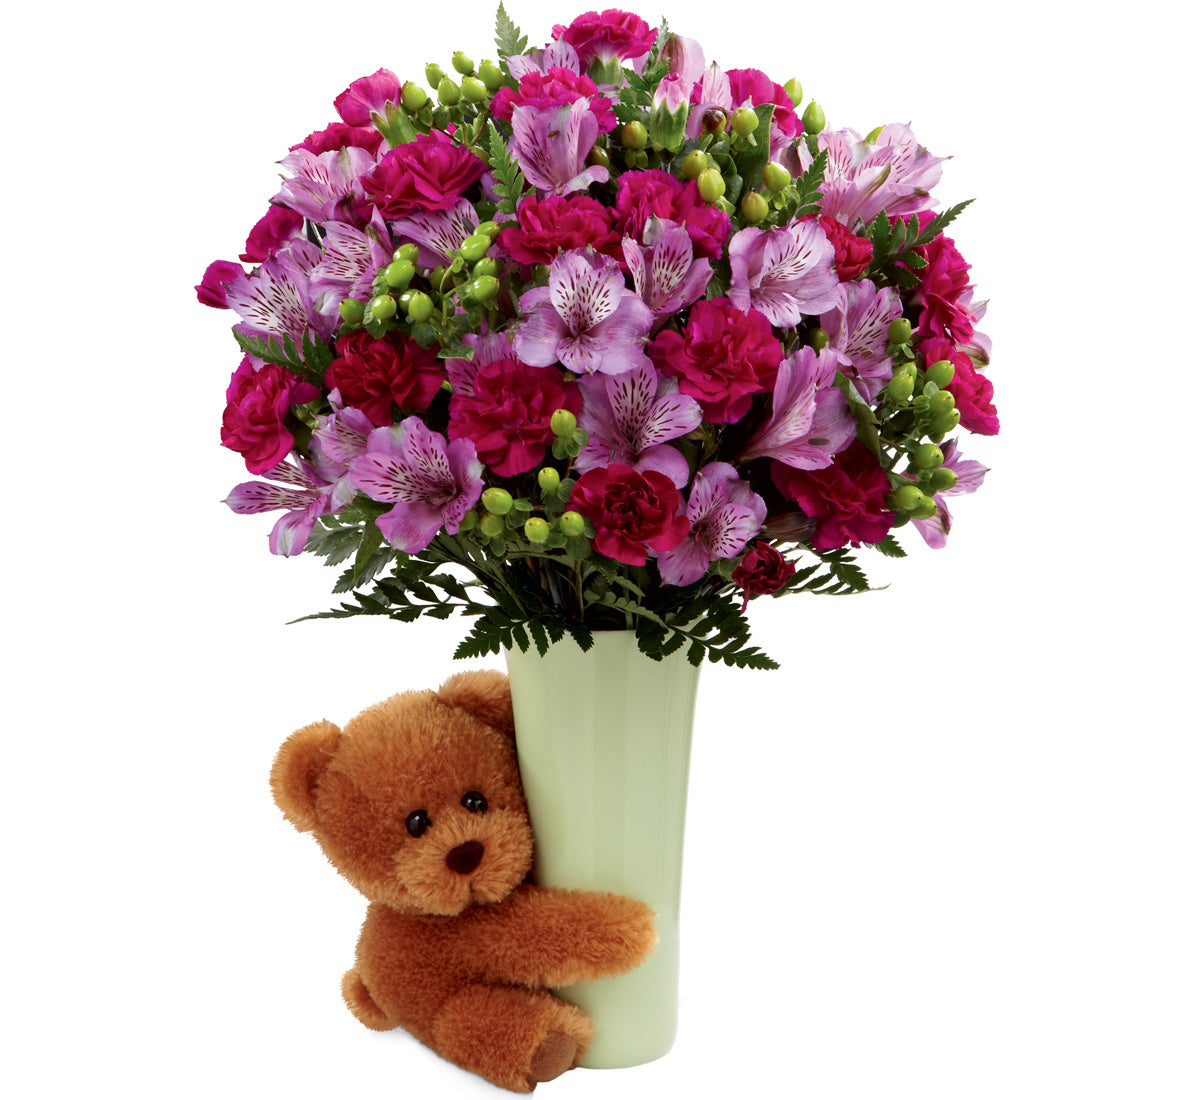 big hug bouquet premium_1_1024x1024@2x